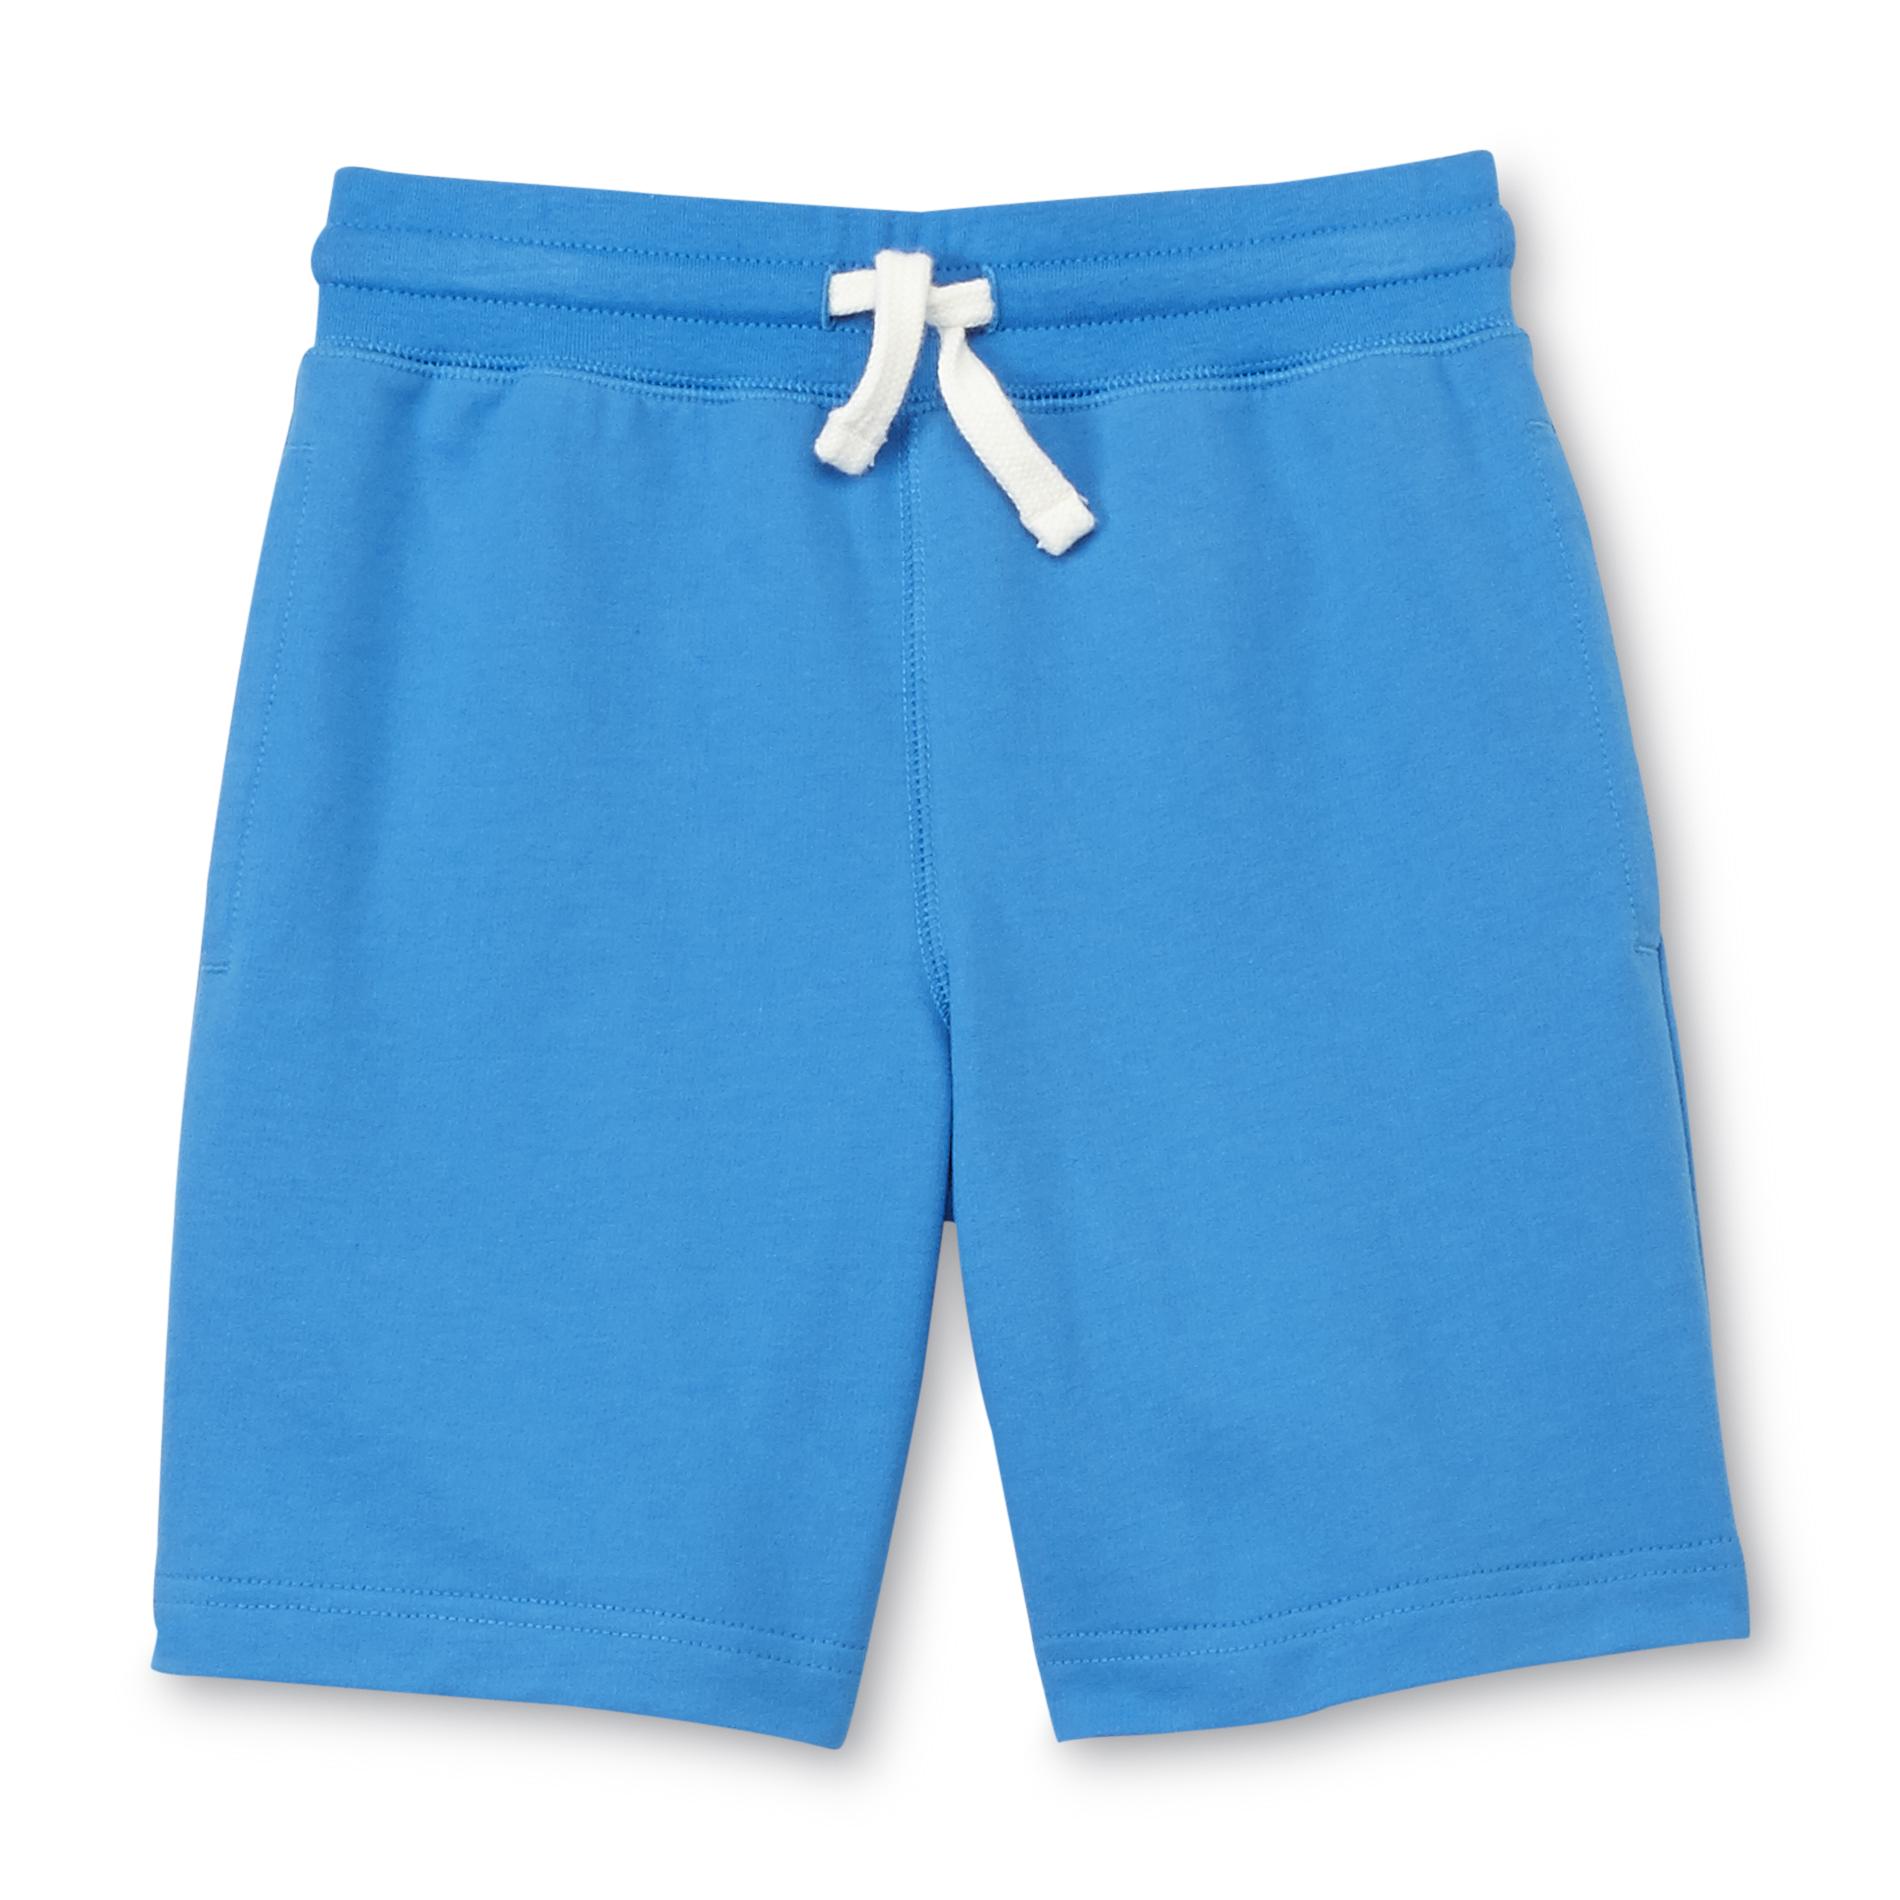 Basic Editions Boy's Knit Shorts